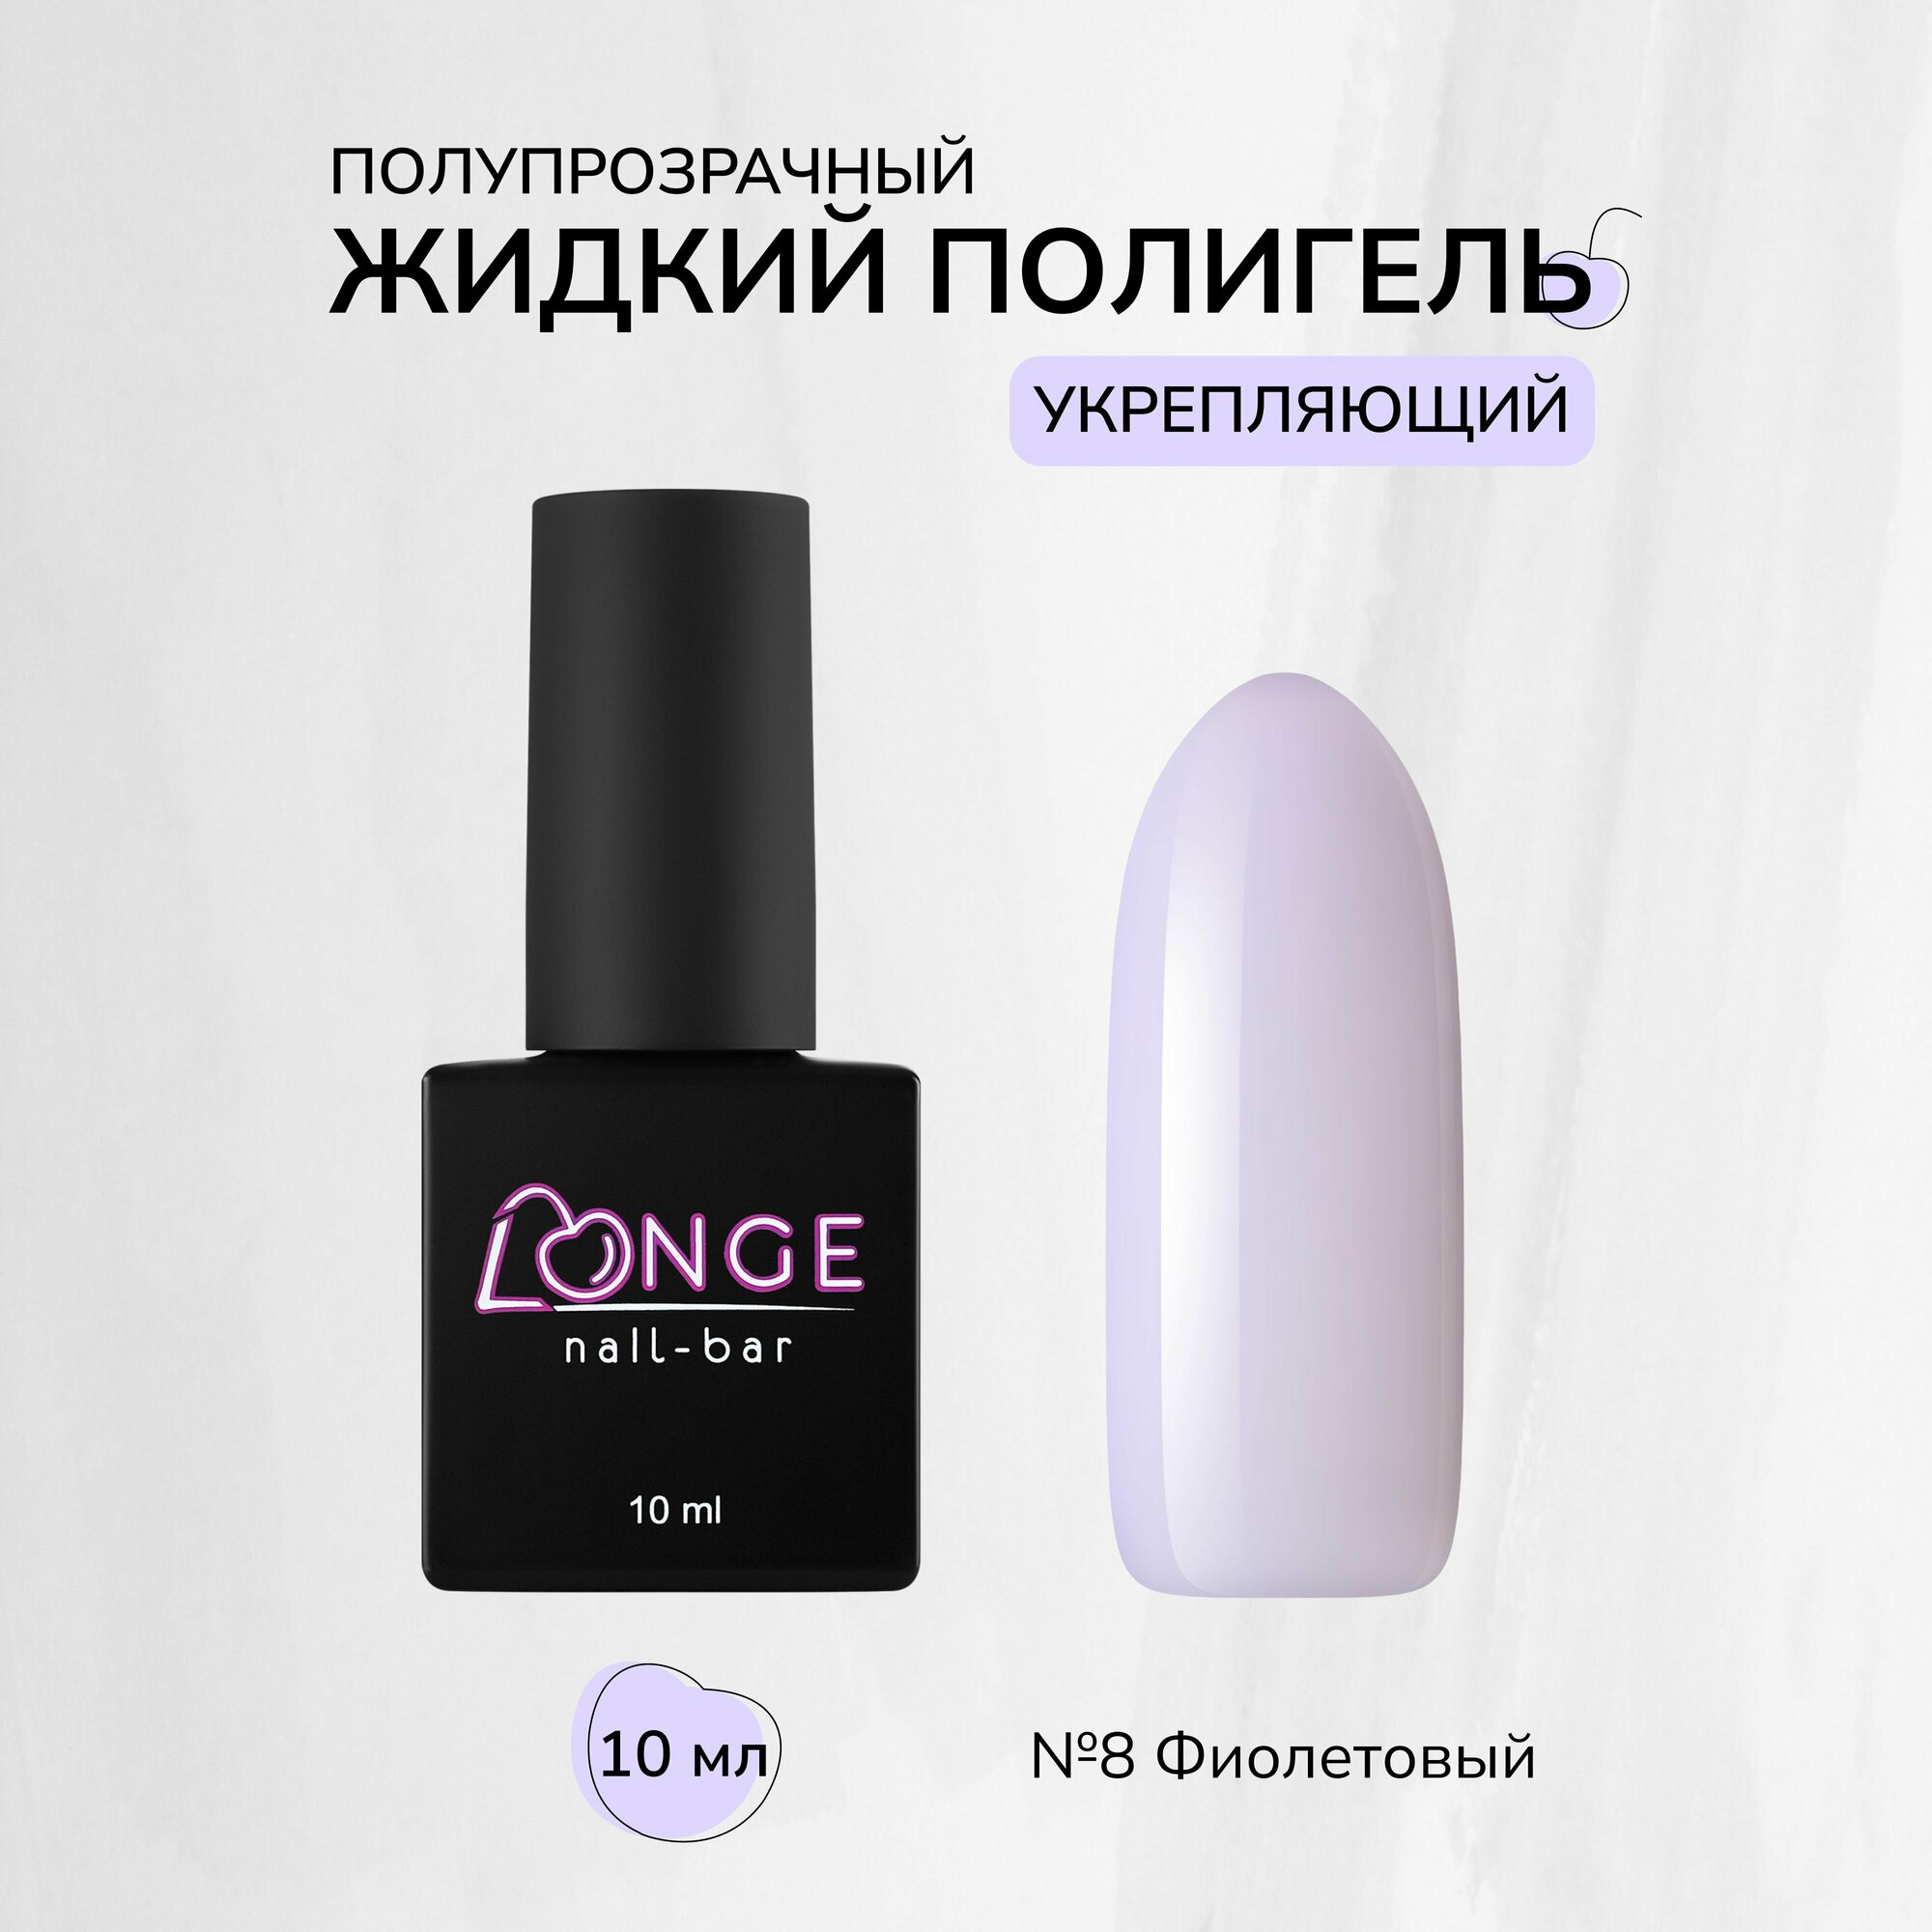 Полигель LONGE nail-bar №08, 10 мл